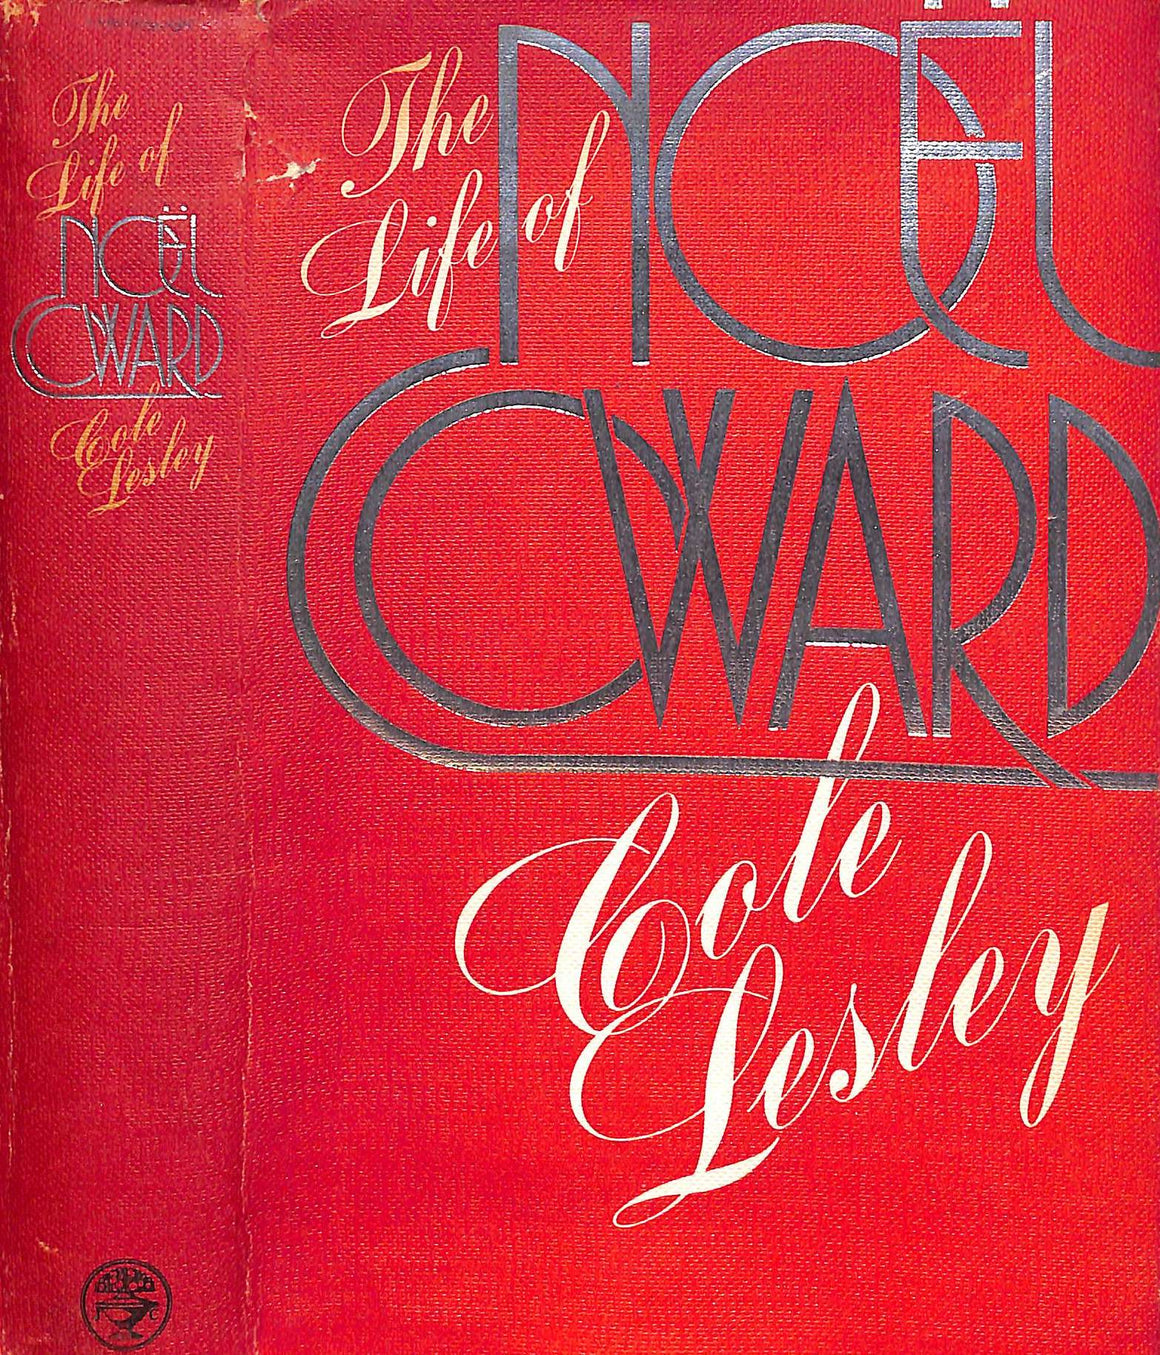 "The Life Of Noel Coward" 1976 LESLEY, Cole